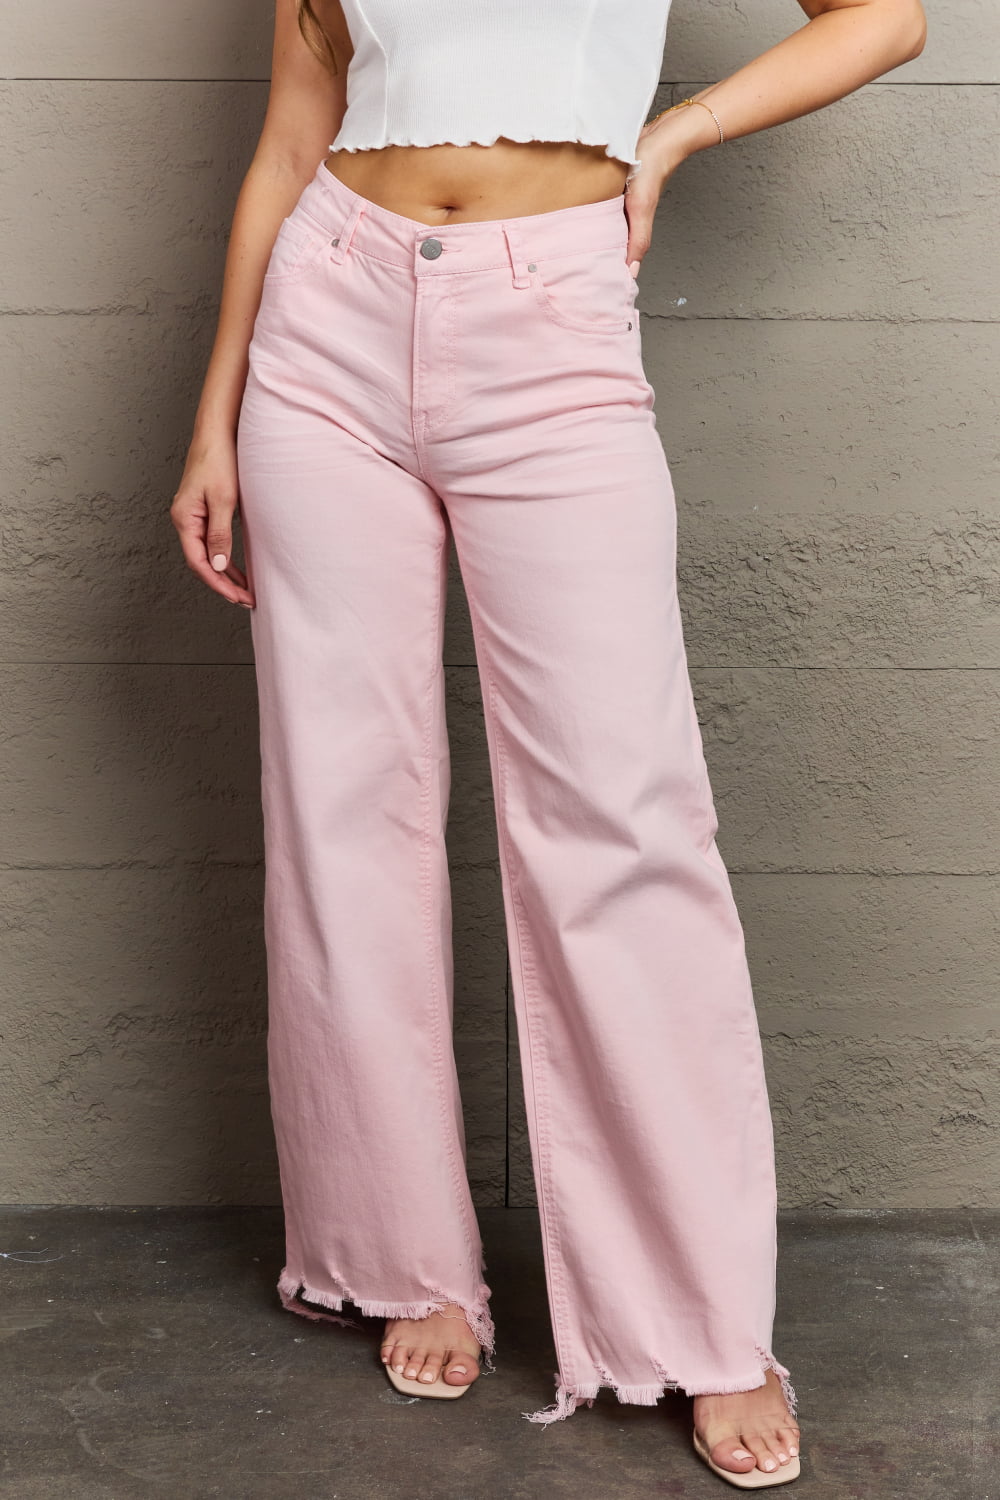 RISEN High Waist Wide Leg Jeans Pants RYSE Clothing Co. Blush Pink 0 